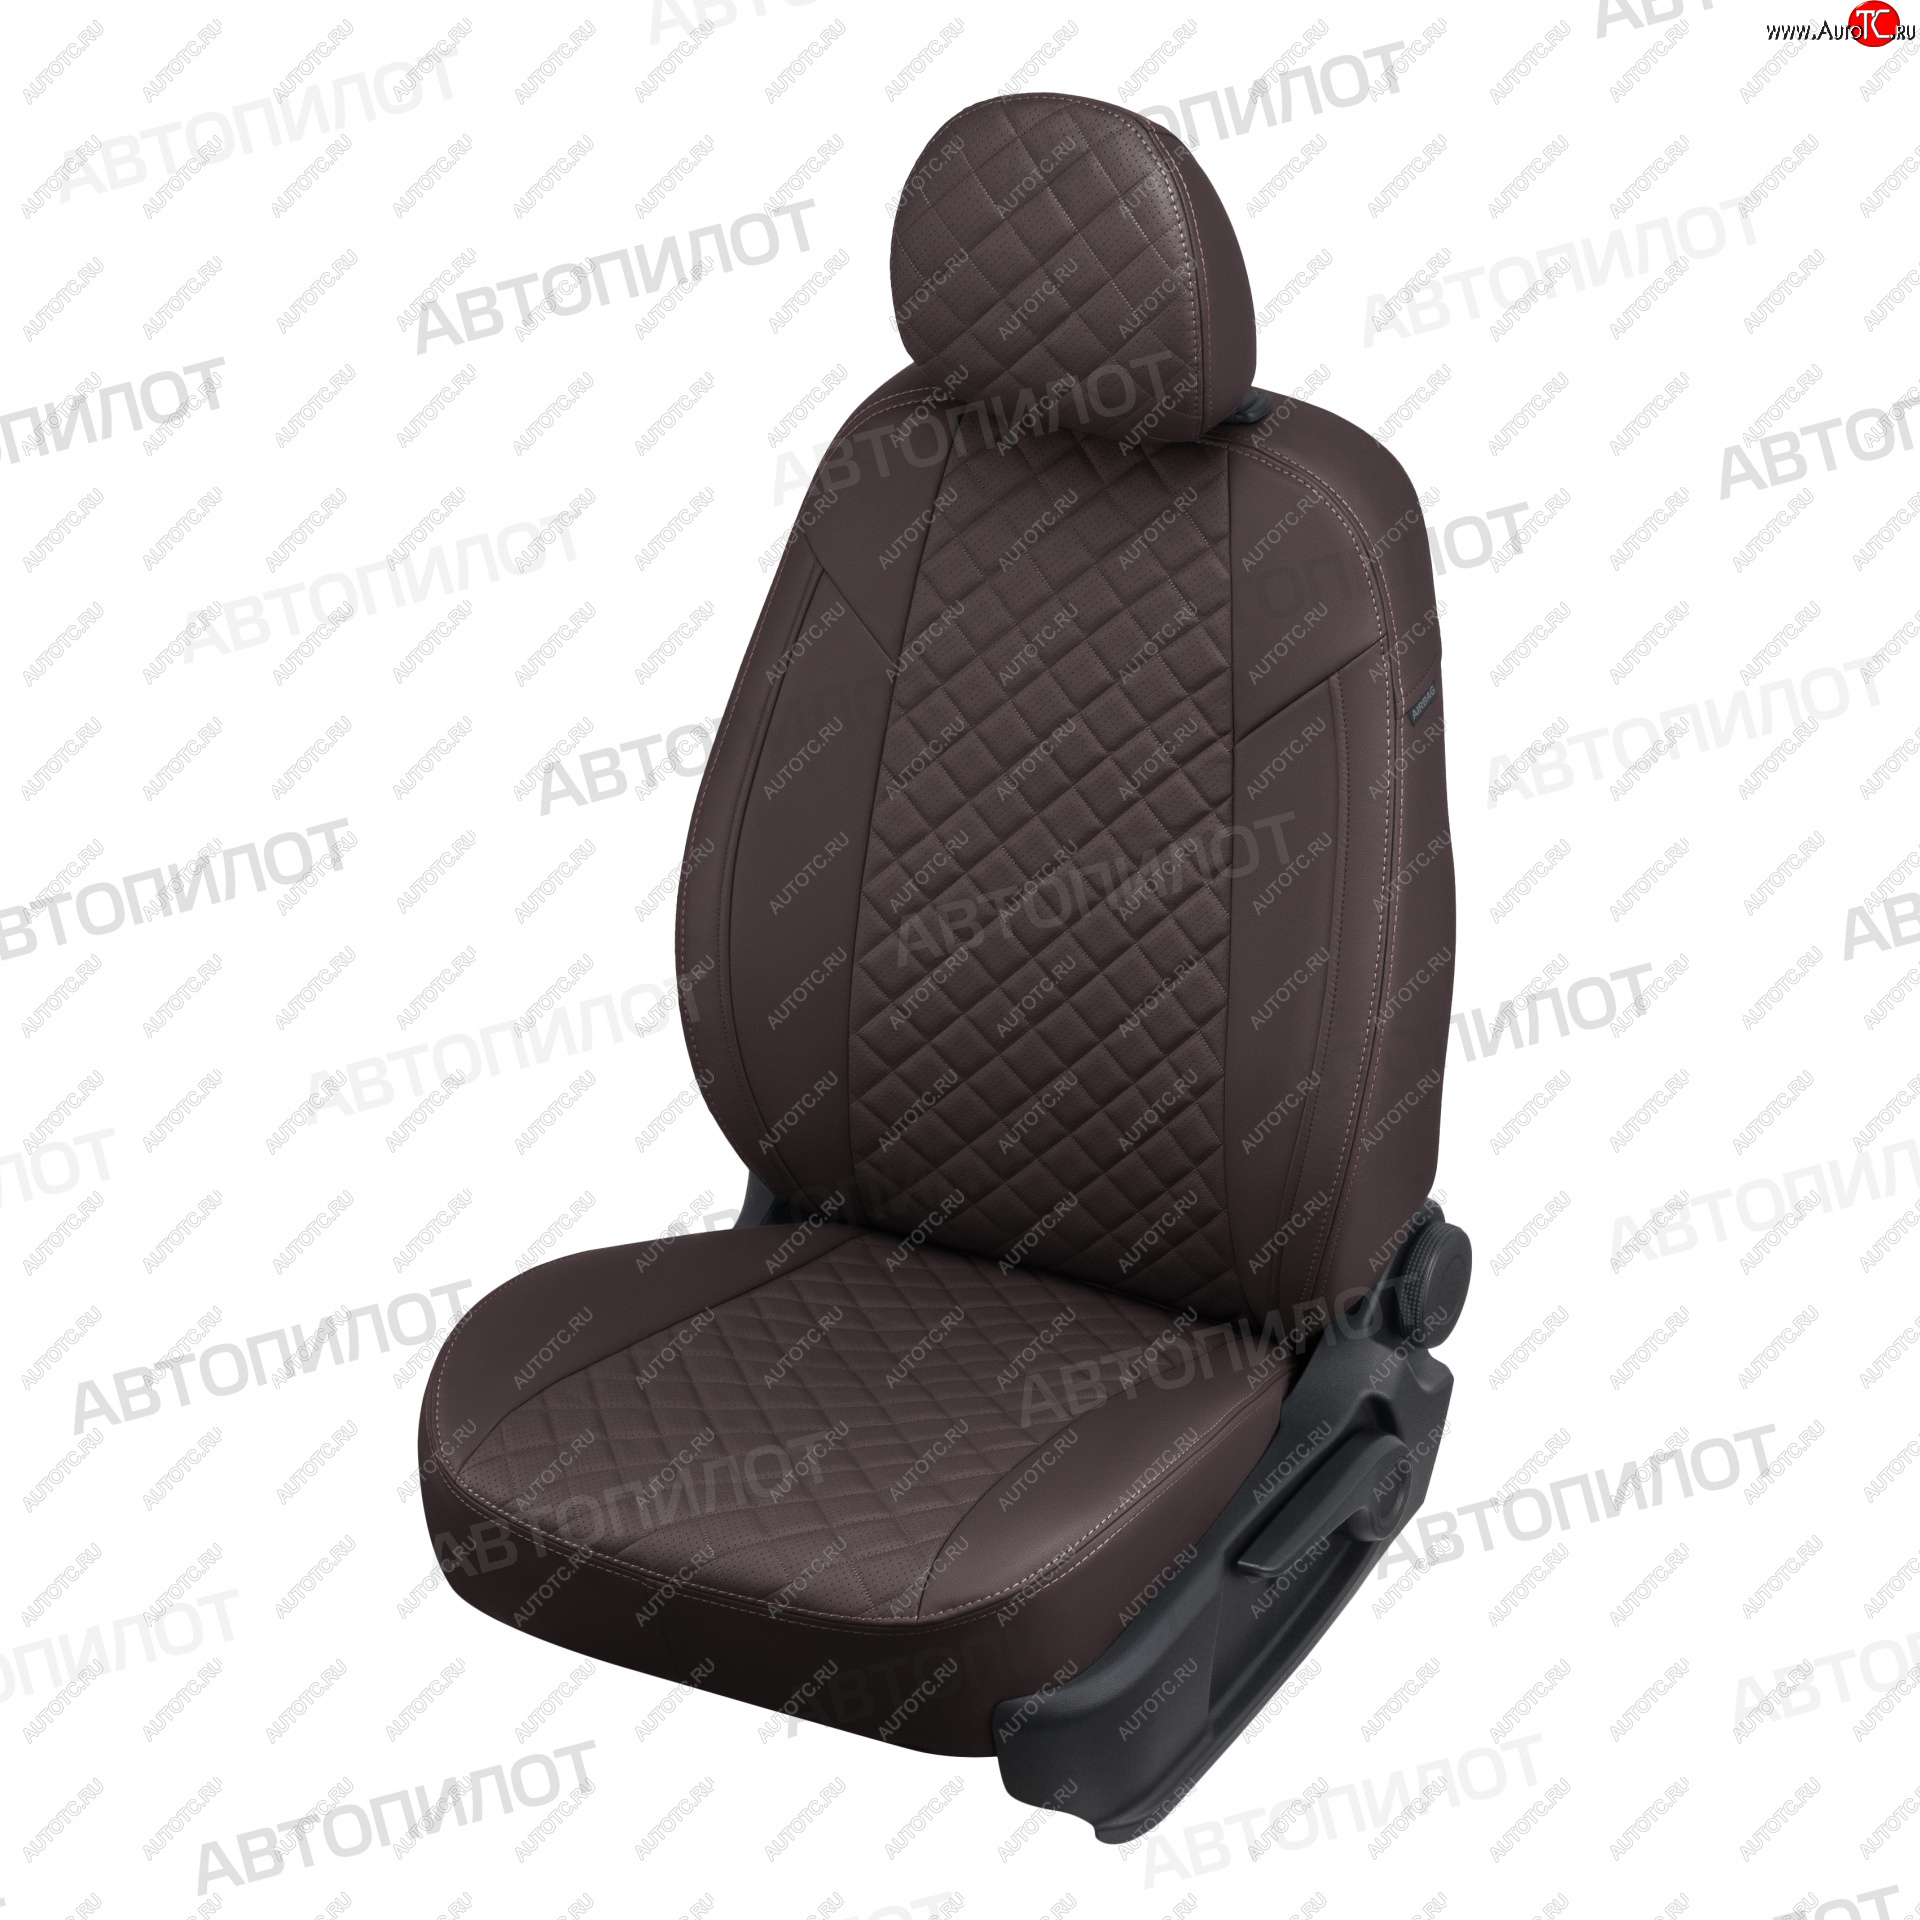 14 499 р. Чехлы сидений (Titanium, экокожа/алькантара) Автопилот Ромб  Ford Mondeo  MK5 CD391 (2014-2024) (шоколад)